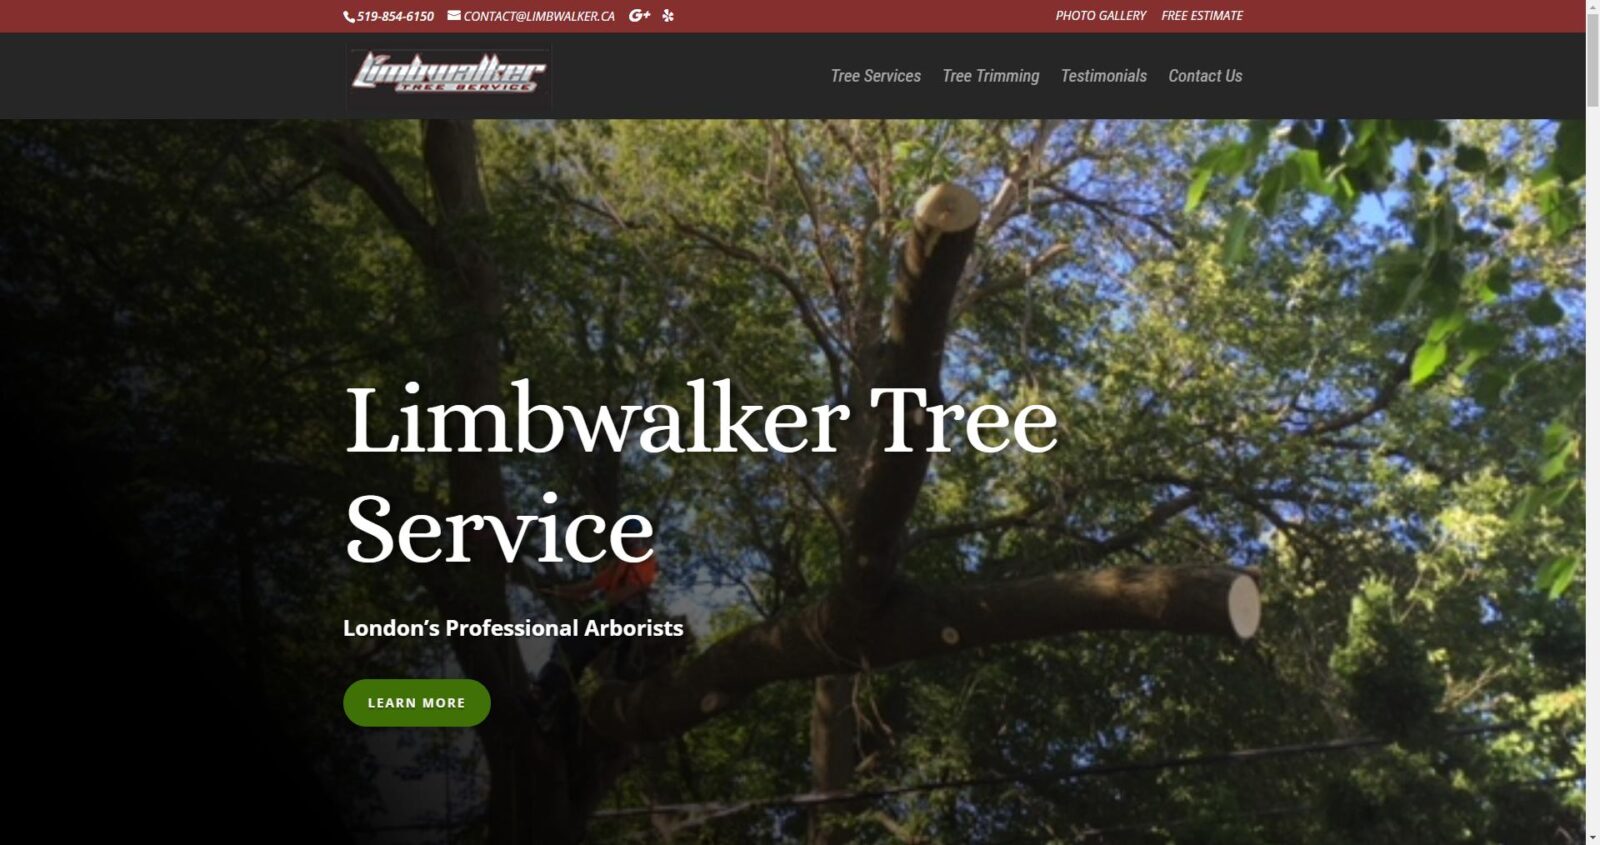 Limbwalker Tree Service London’s Professional Arborists